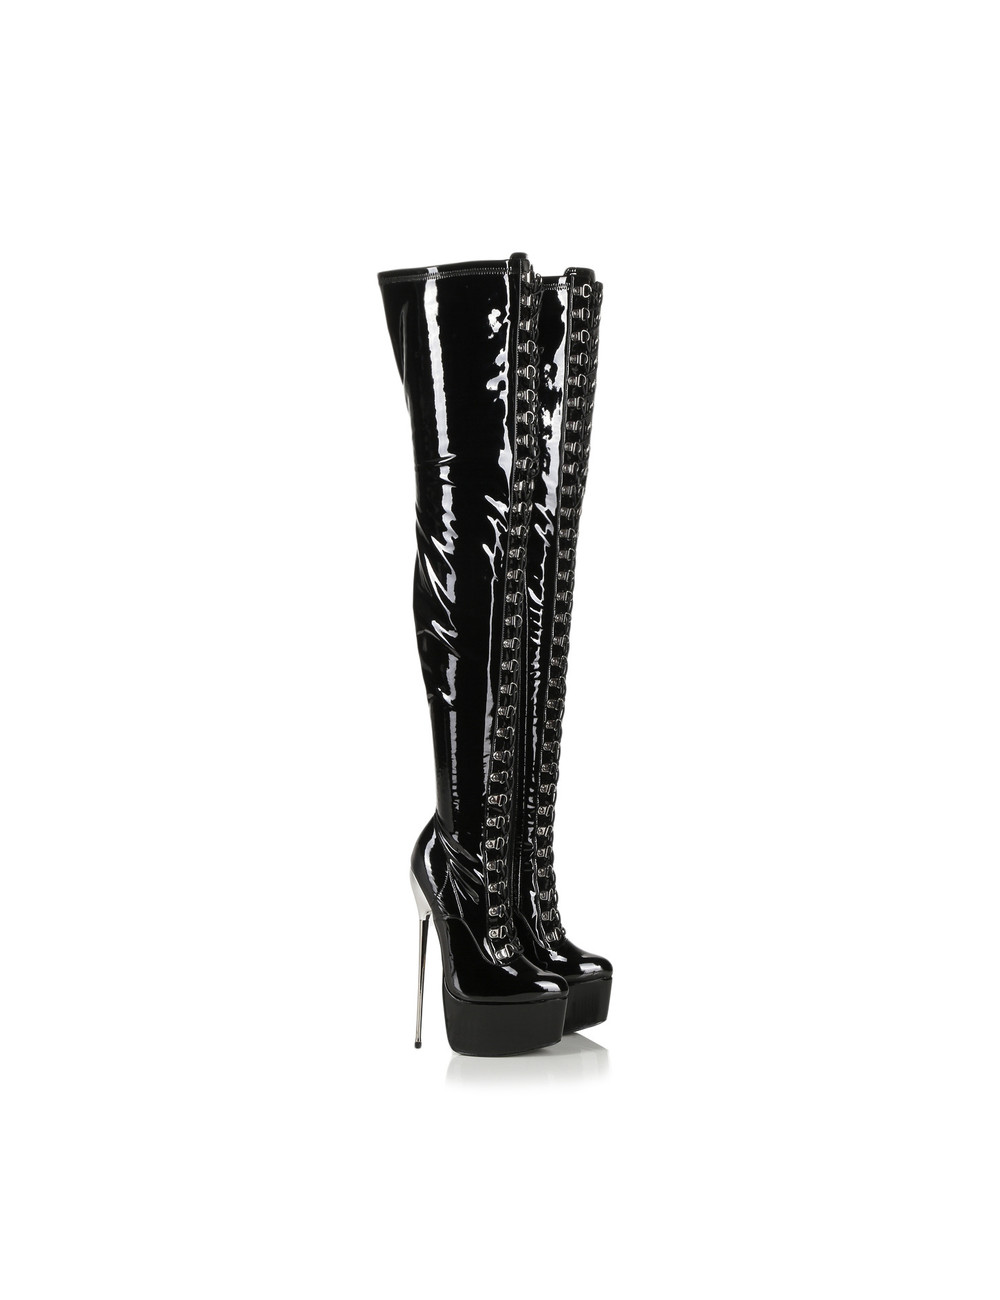 SLICK Black platform patent thigh boots with ultra high gold metal heels